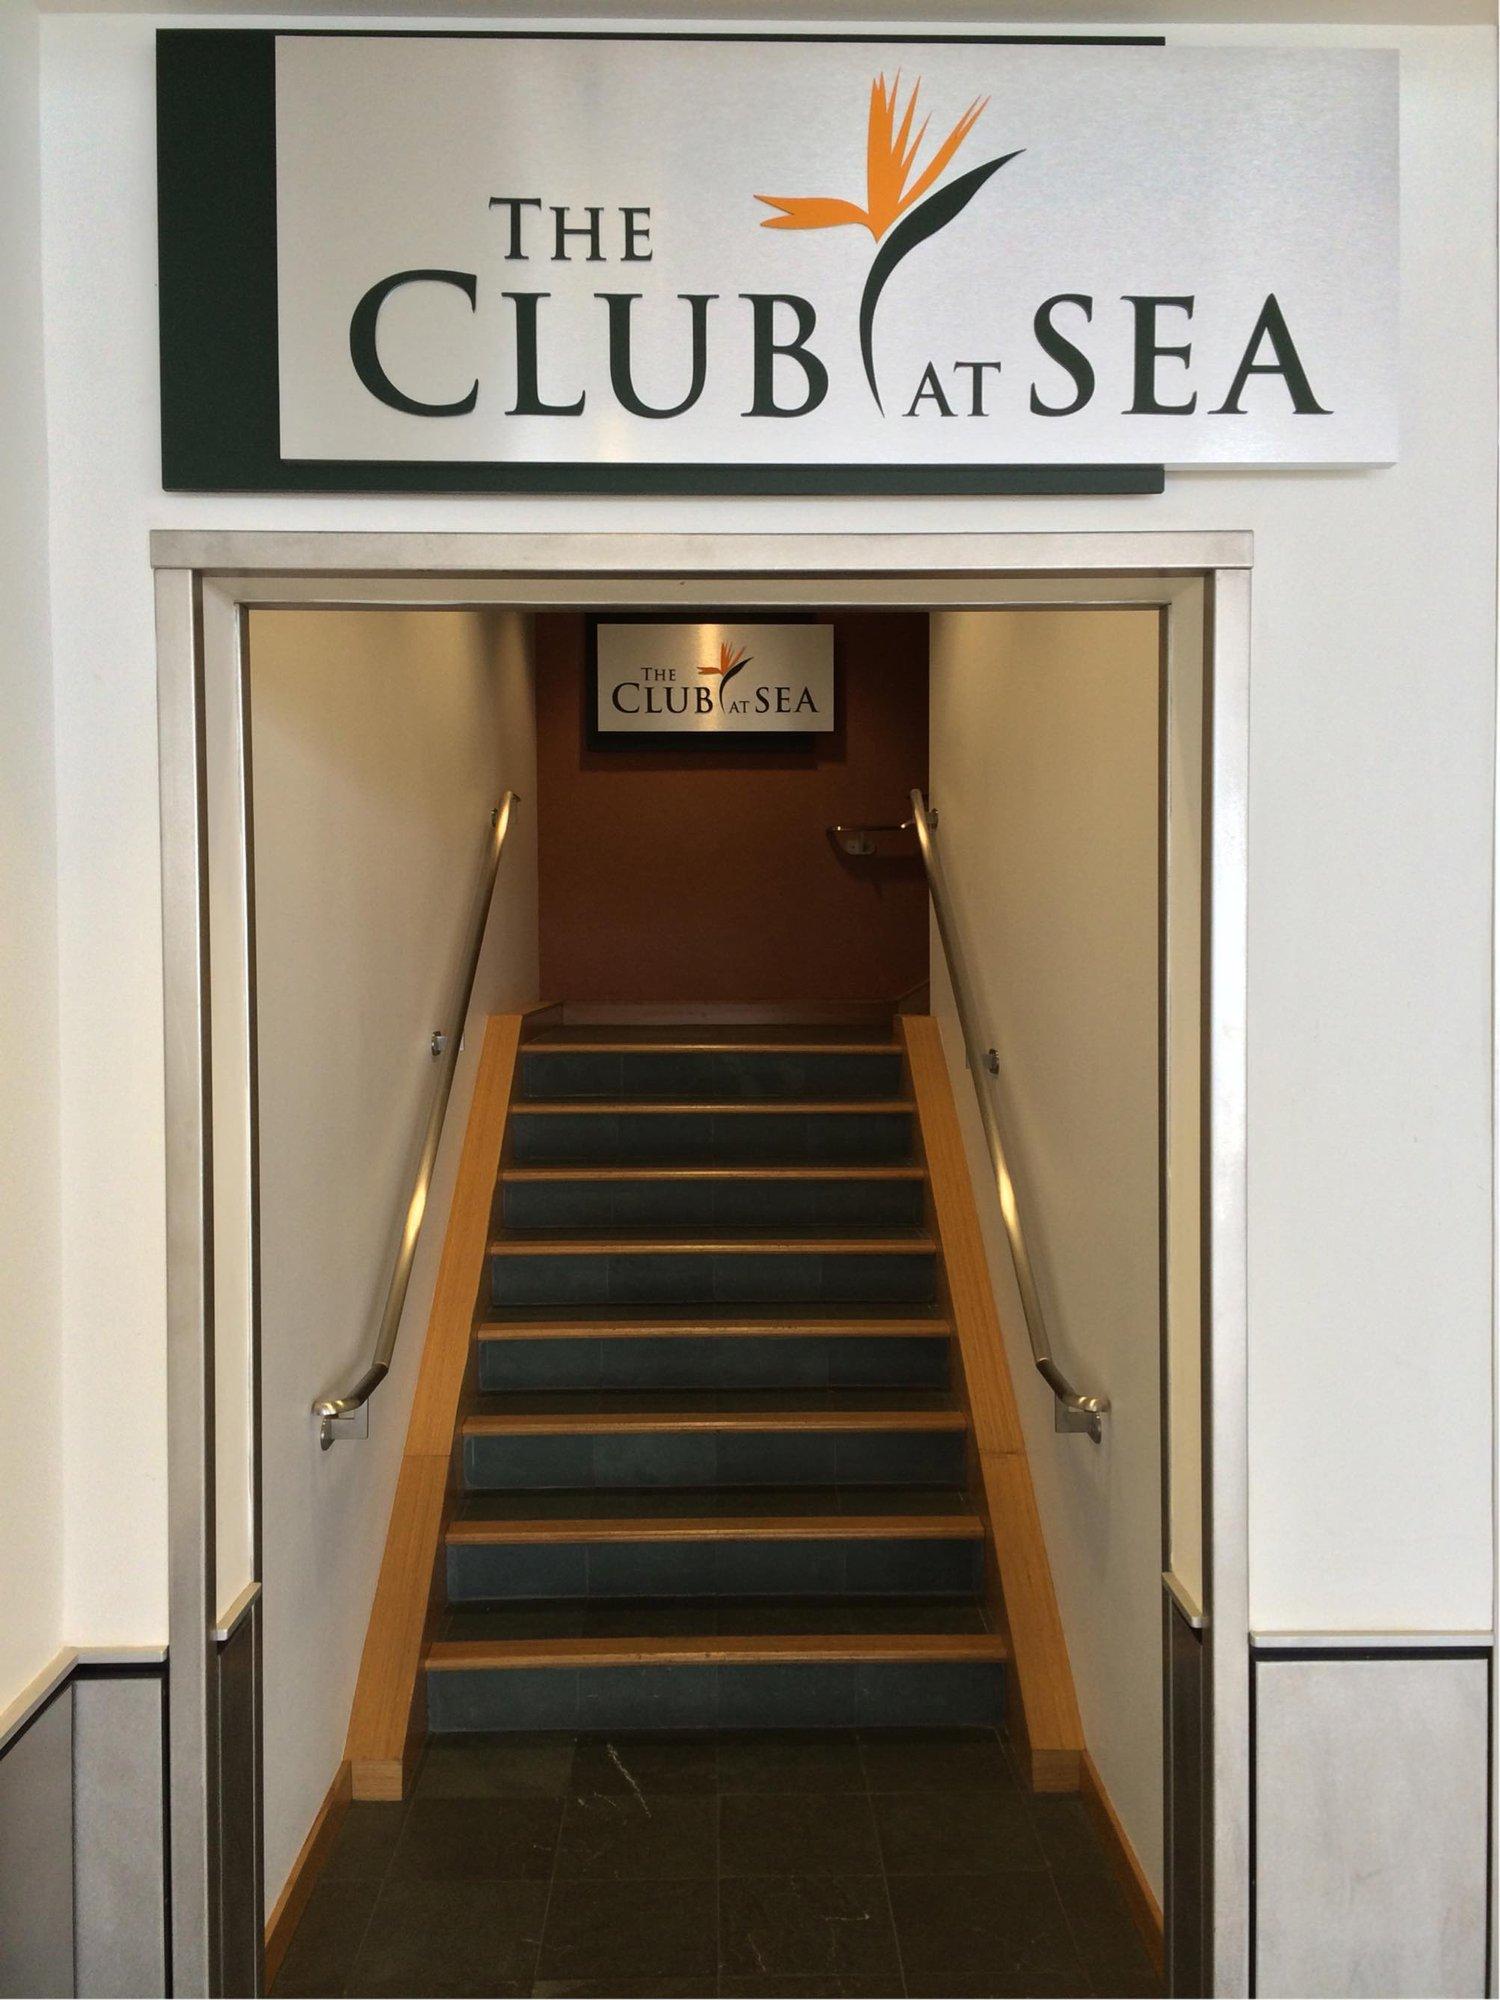 The Club SEA image 16 of 46